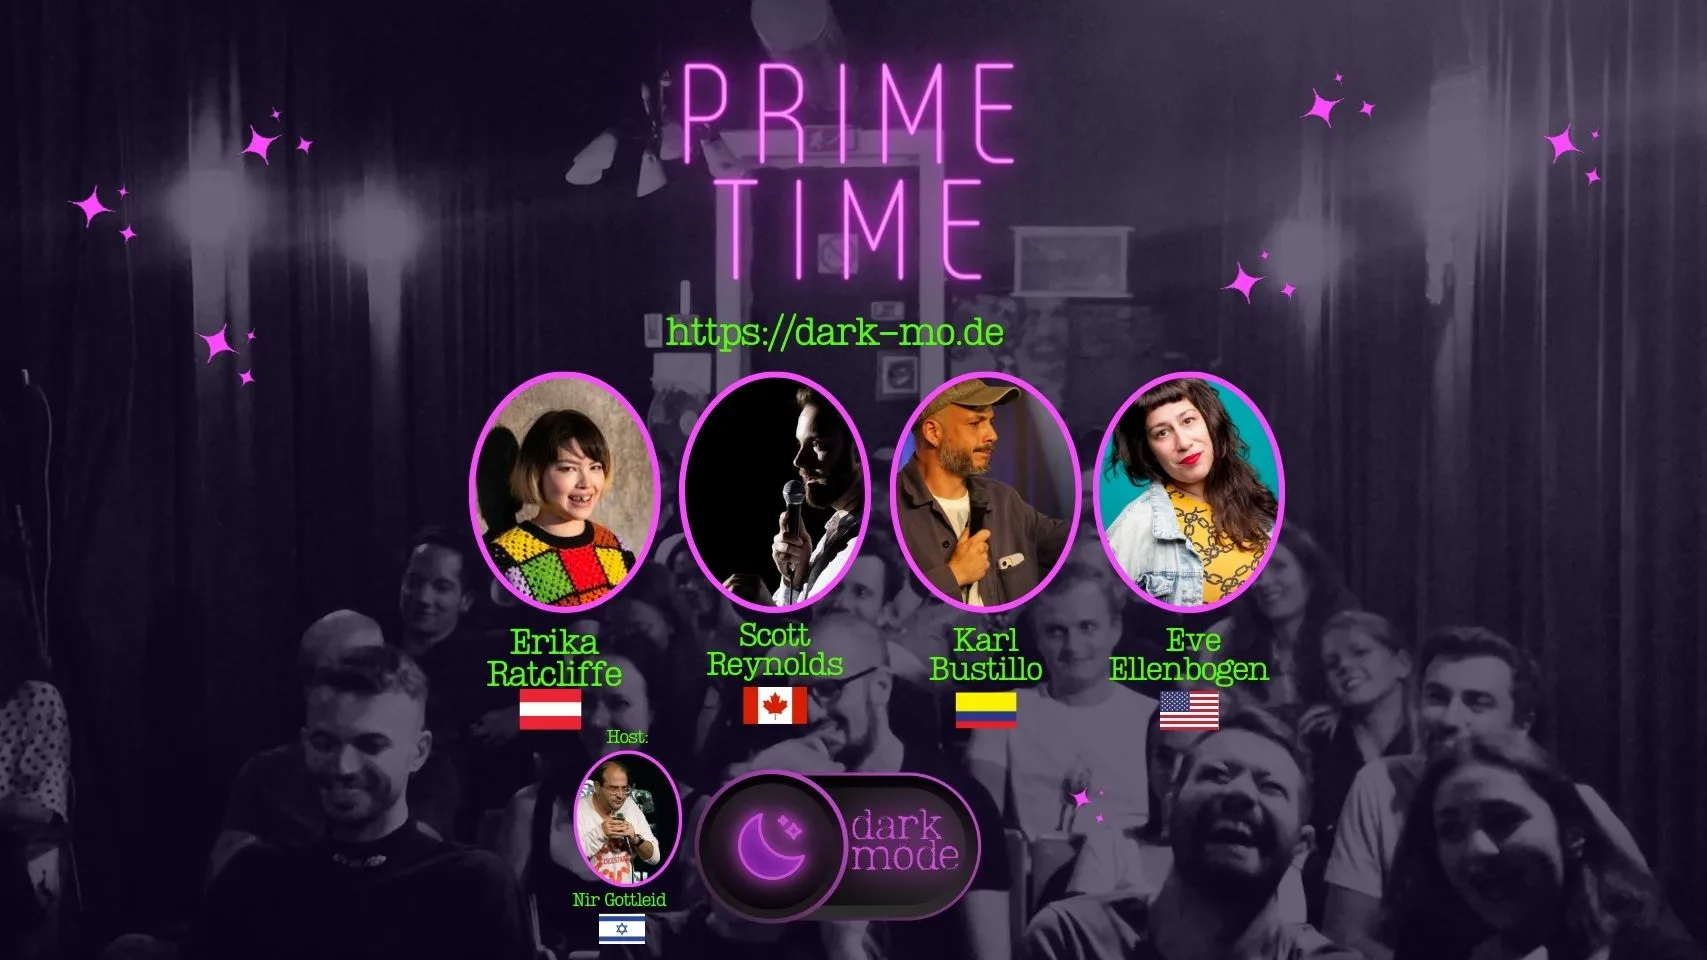 Dark Mode #49 Prime Time! Berlin’s Premiere Dark Comedy Show!